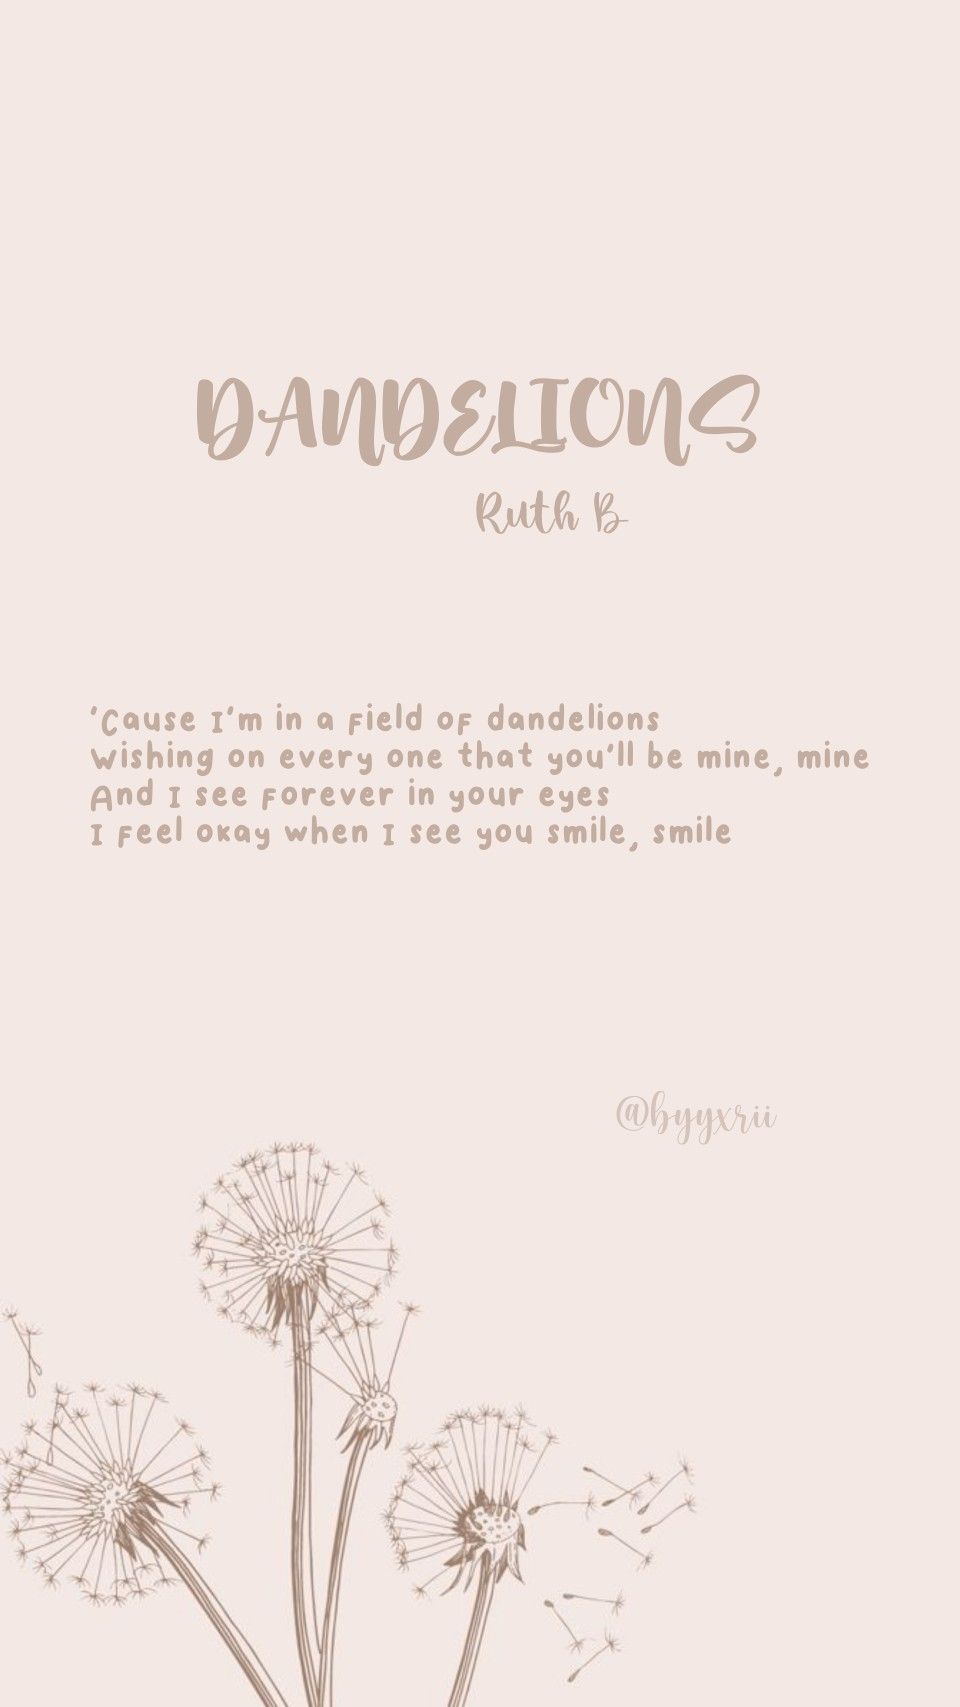 Wallpaper lyrics. Dandelion wallpaper, Dandelion picture, Dandelion lyrics